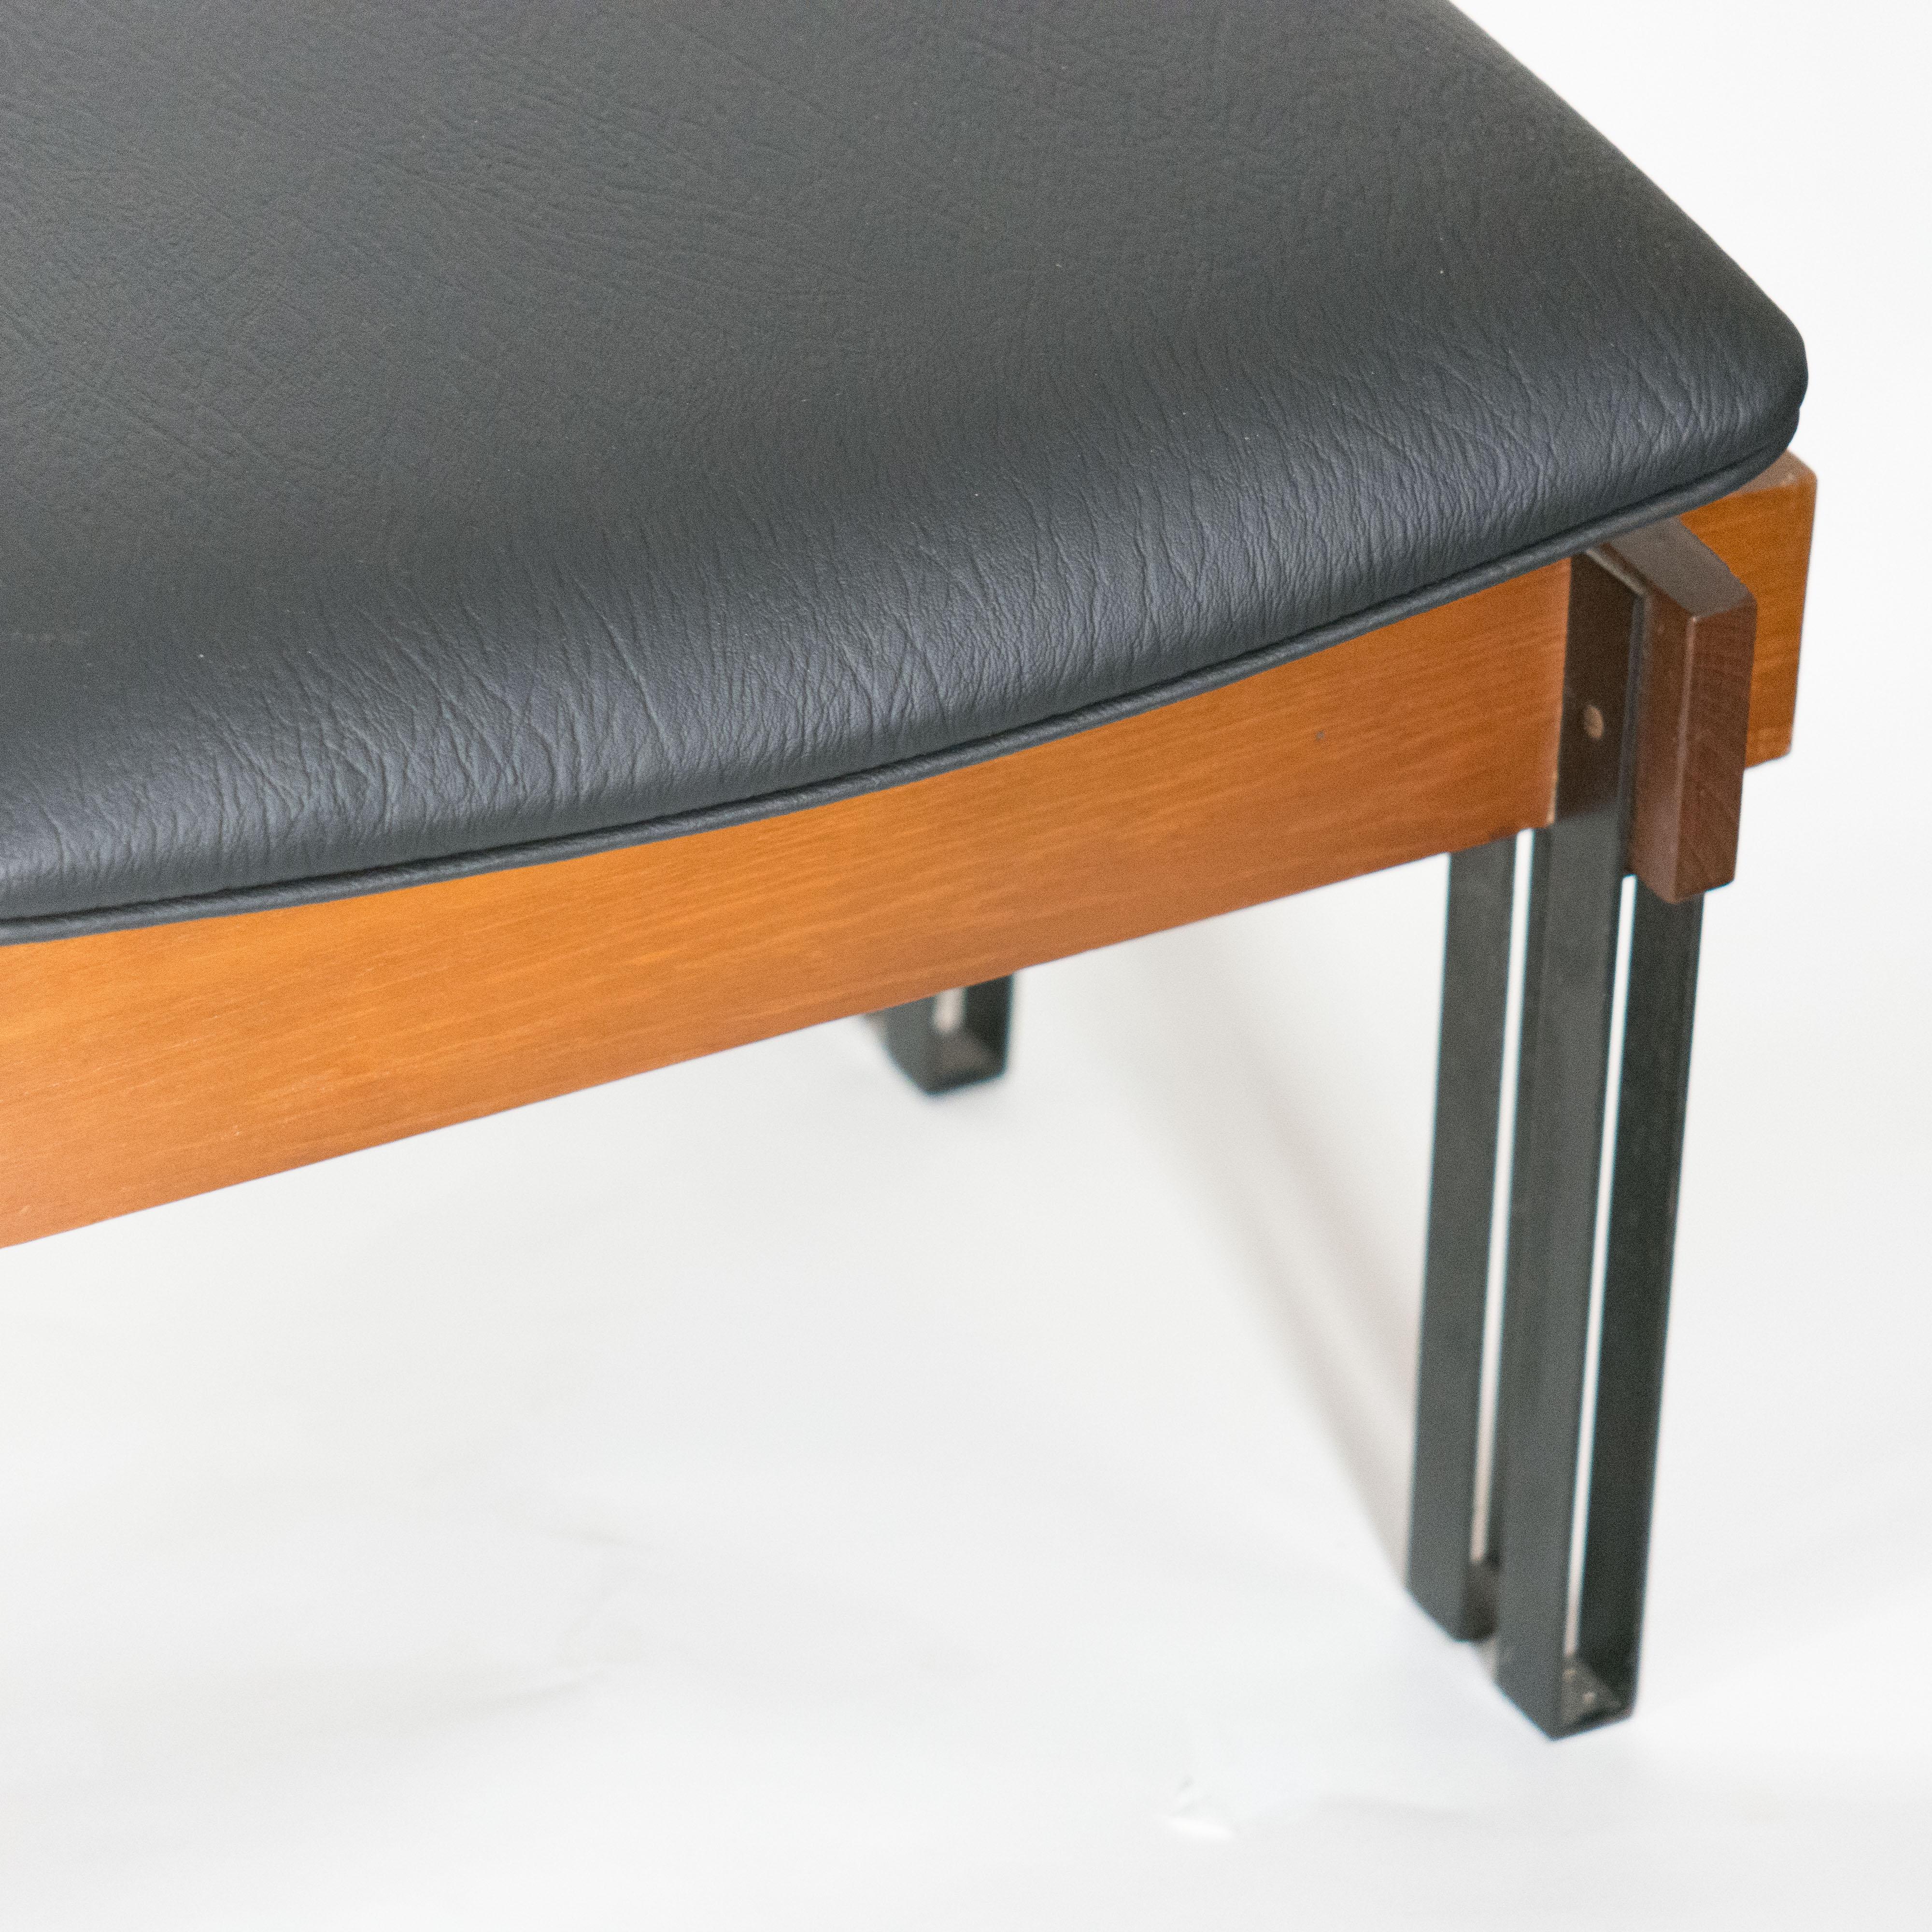 1960s Modernist Dark Wood & Leather Bench Italian Design Inge and Luciano Rubino 7